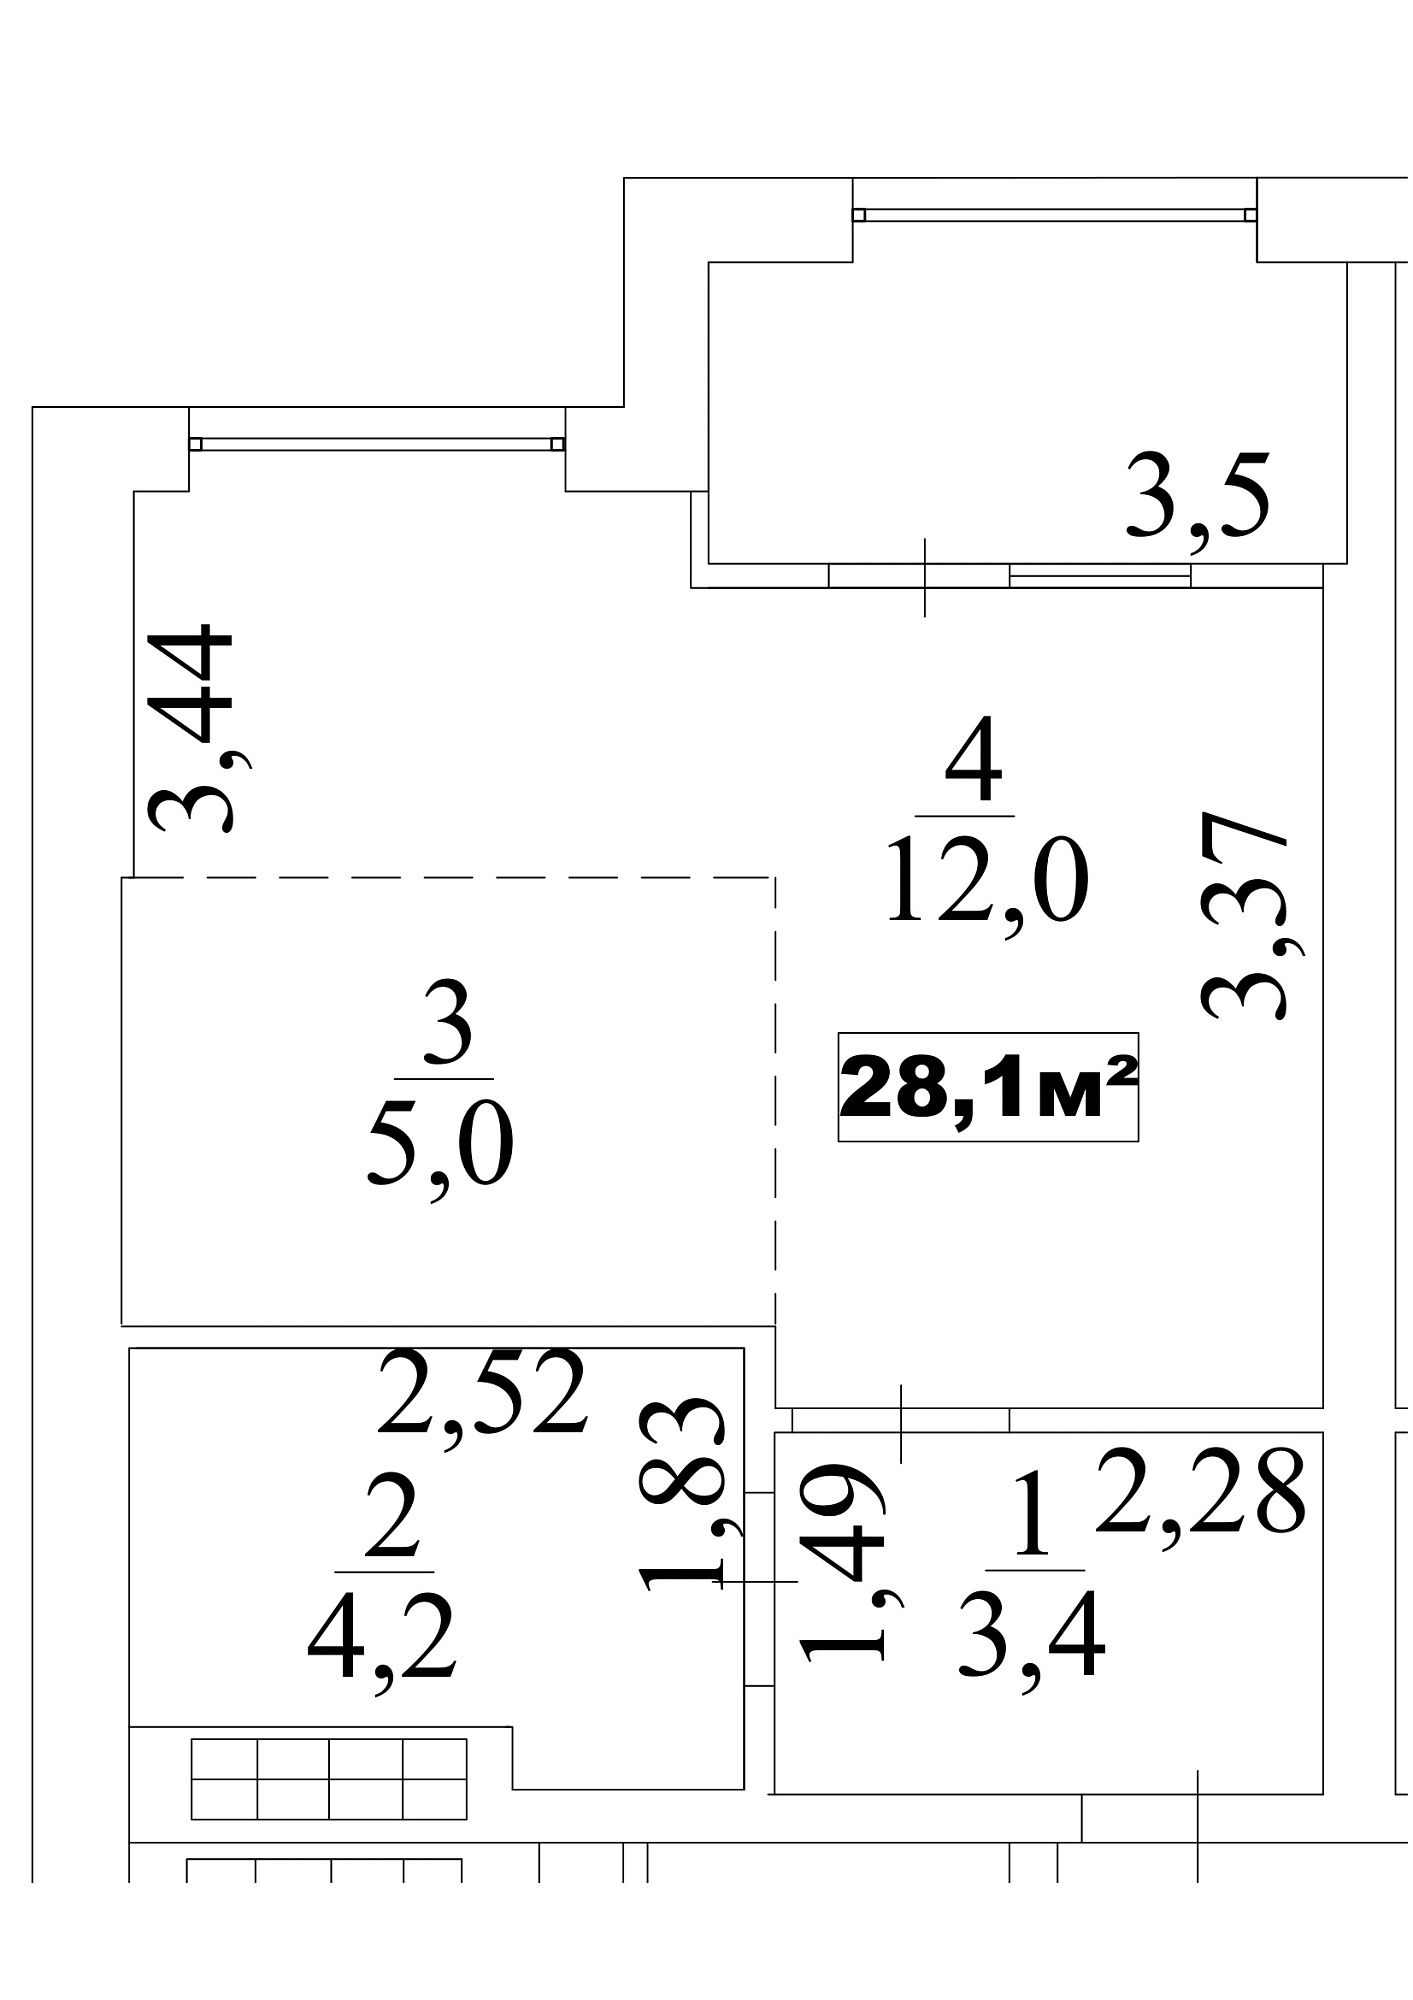 Планировка Smart-квартира площей 28.1м2, AB-10-02/0012б.